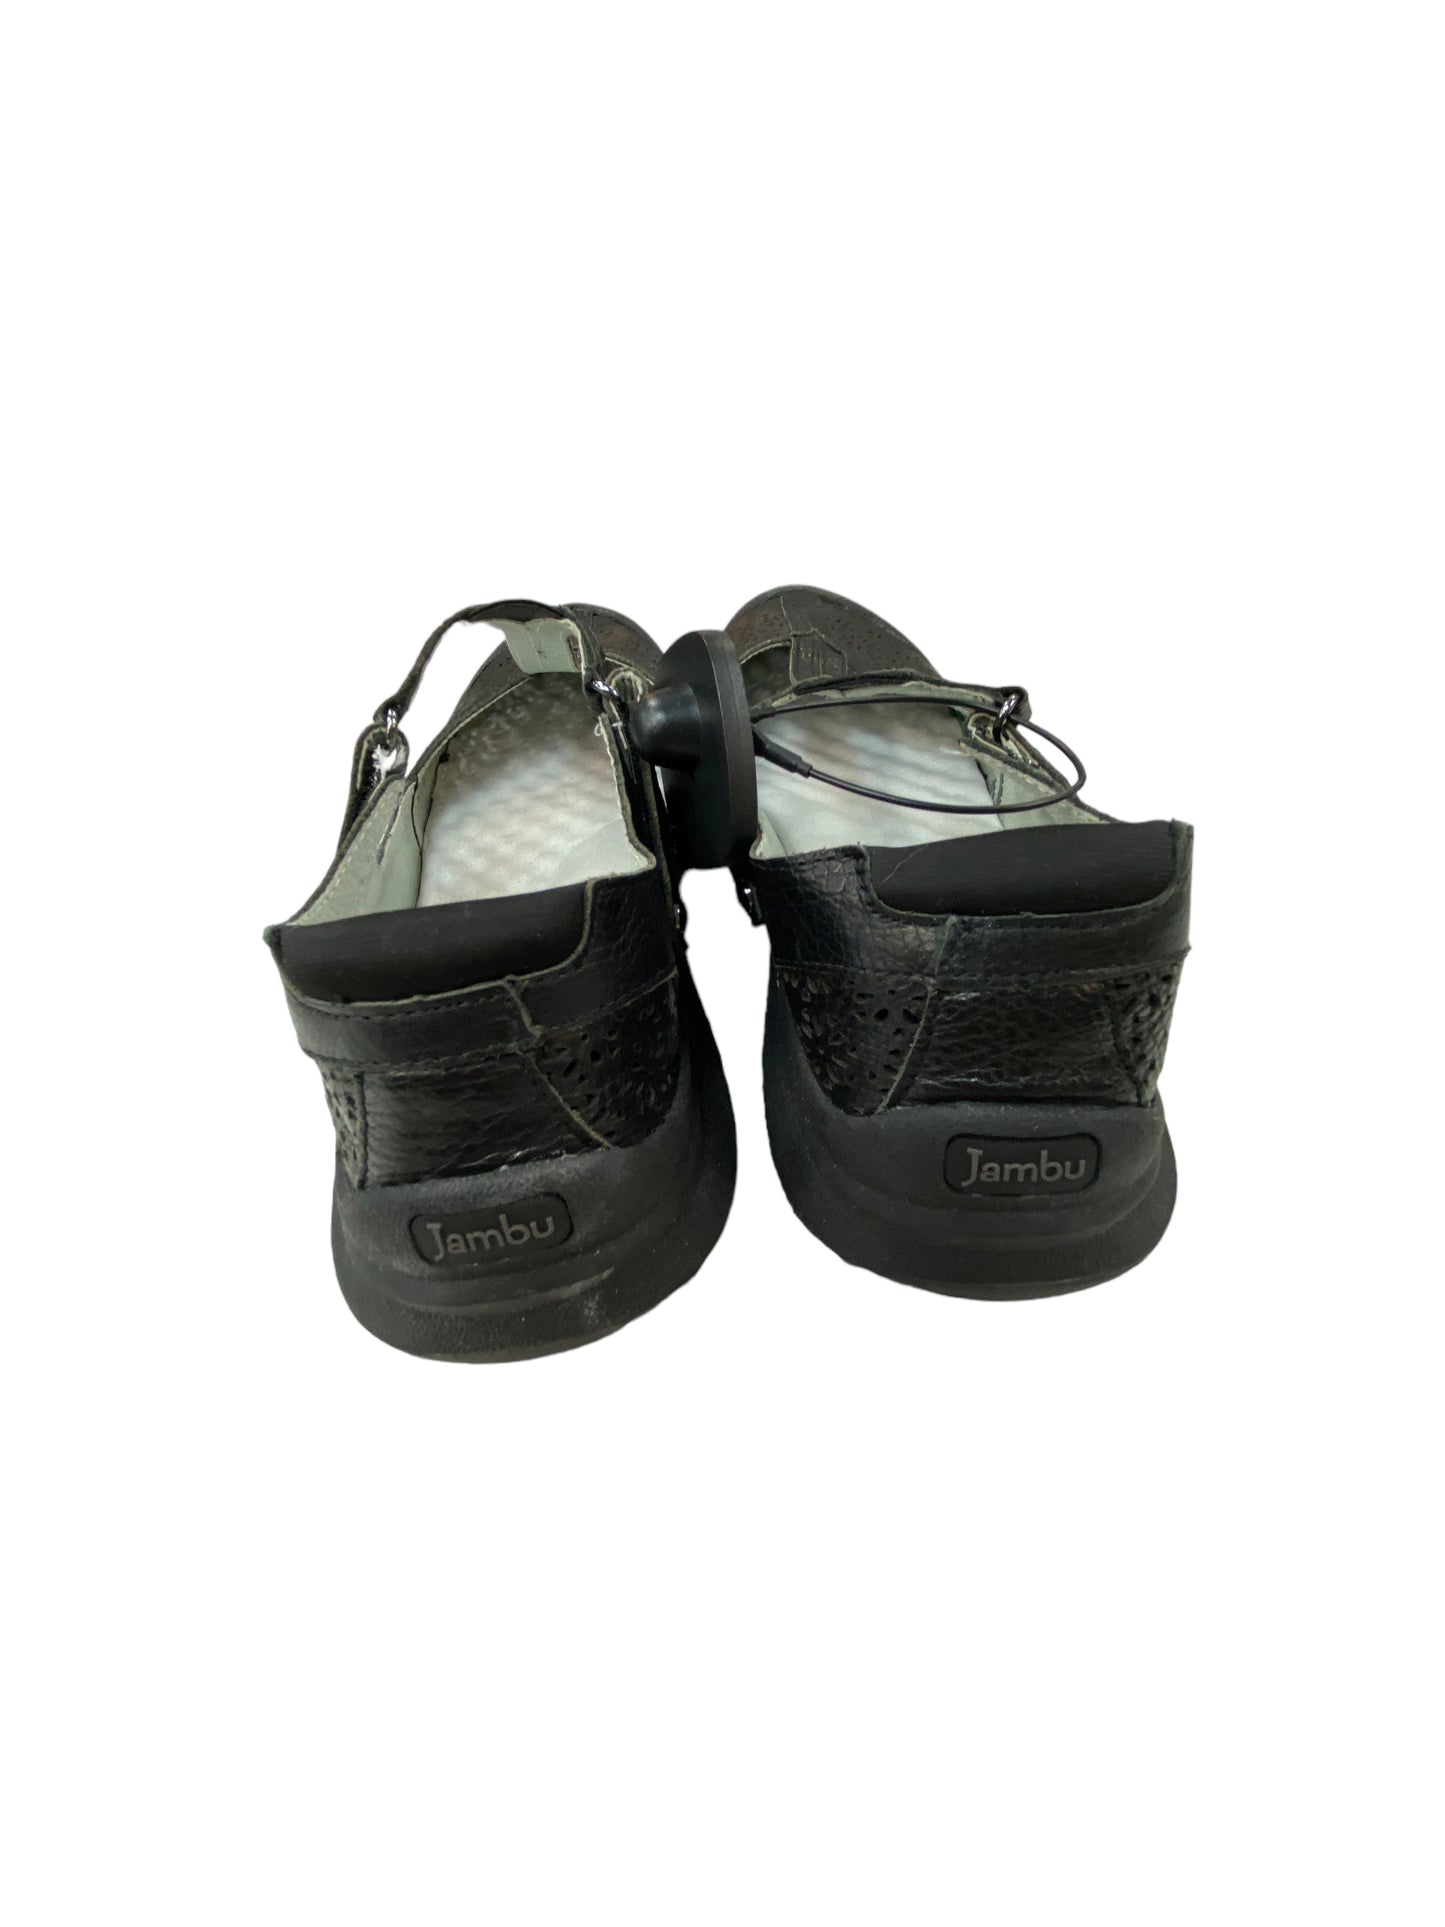 Black Shoes Flats Jambu, Size 9.5